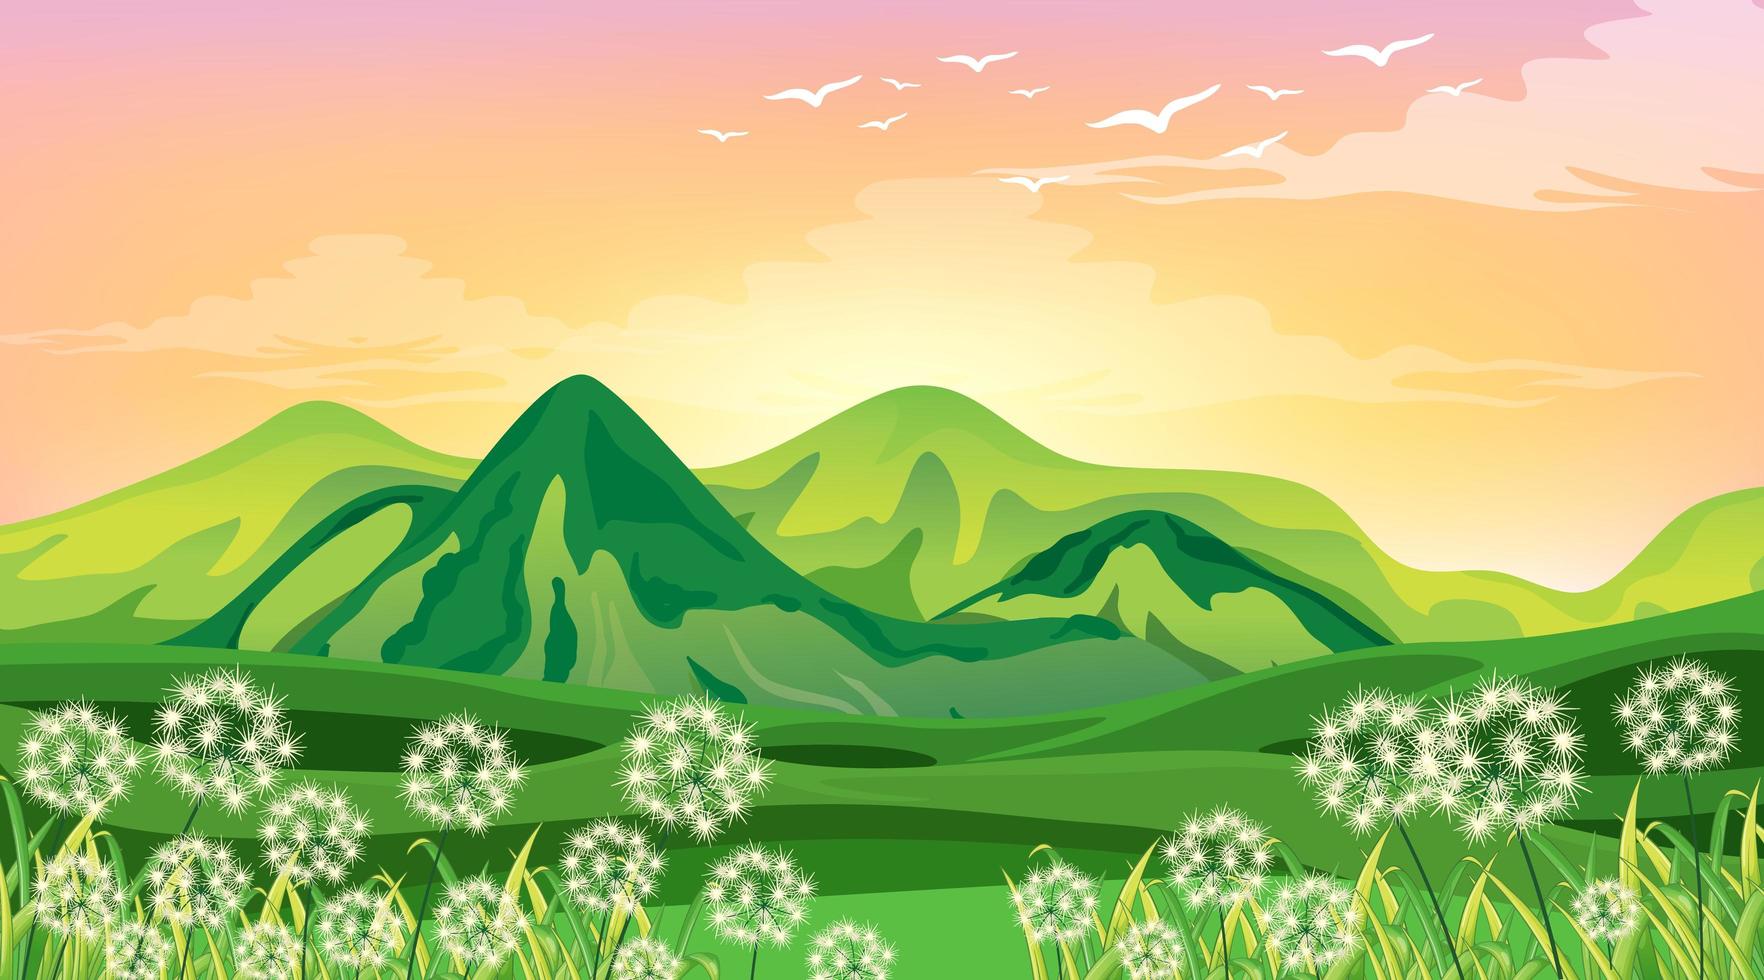 Szene mit grünen Bergen und Feld bei Sonnenuntergang vektor